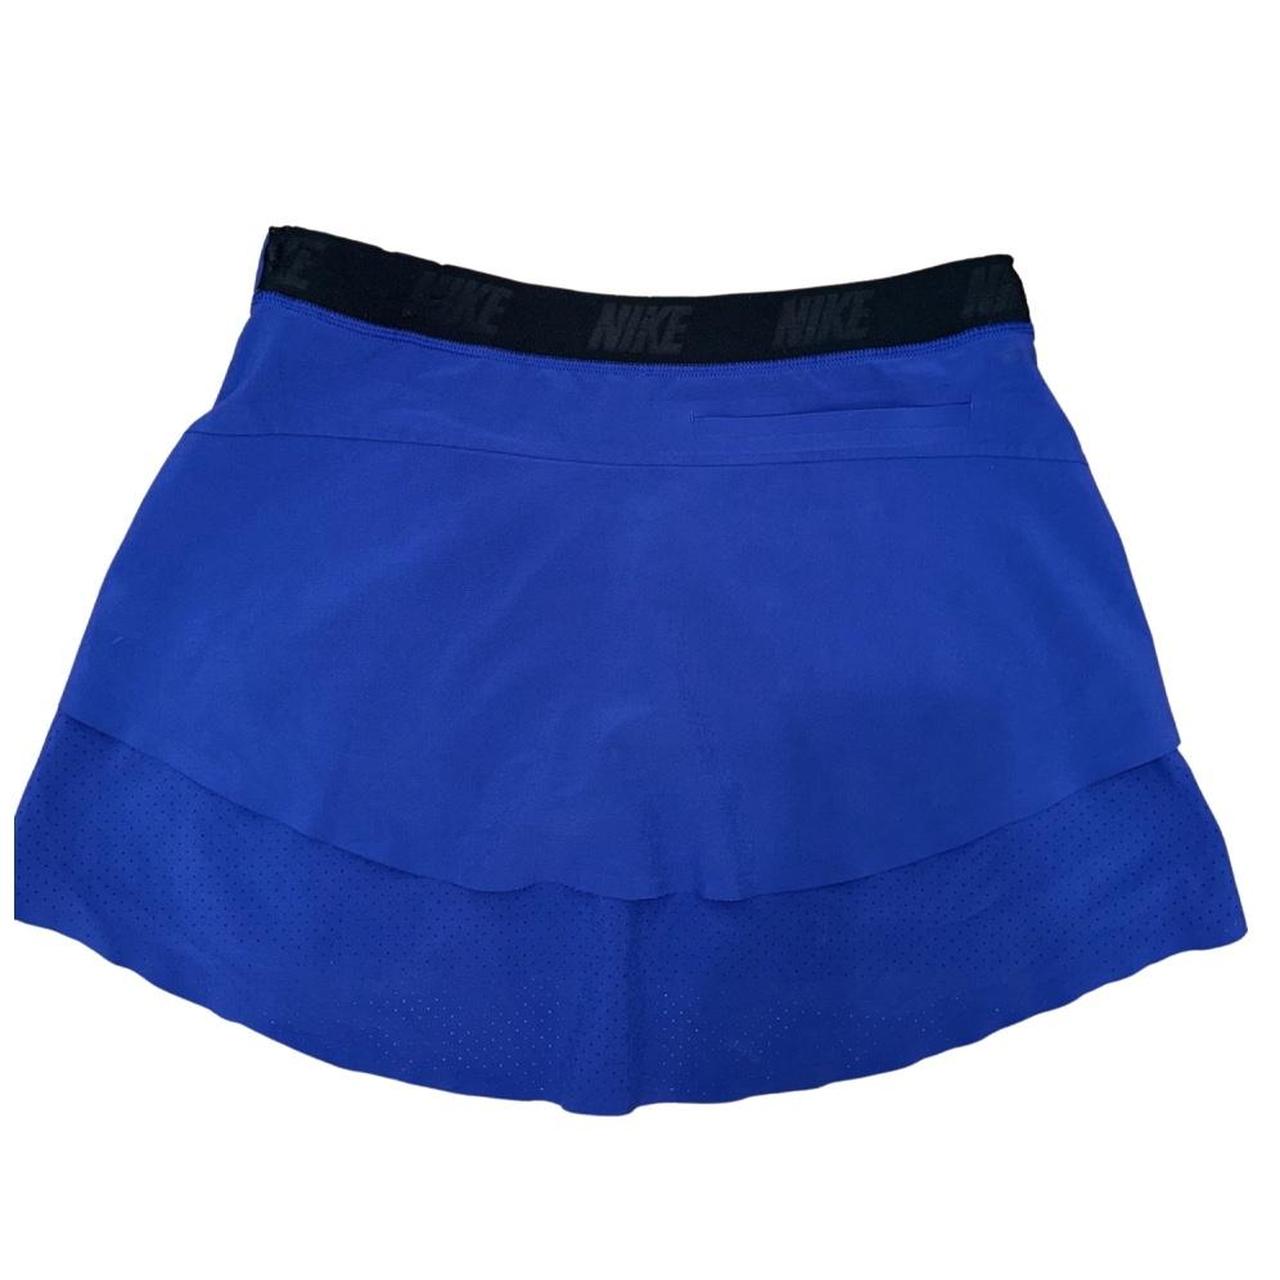 Nike Women's Blue and Navy Skirt | Depop